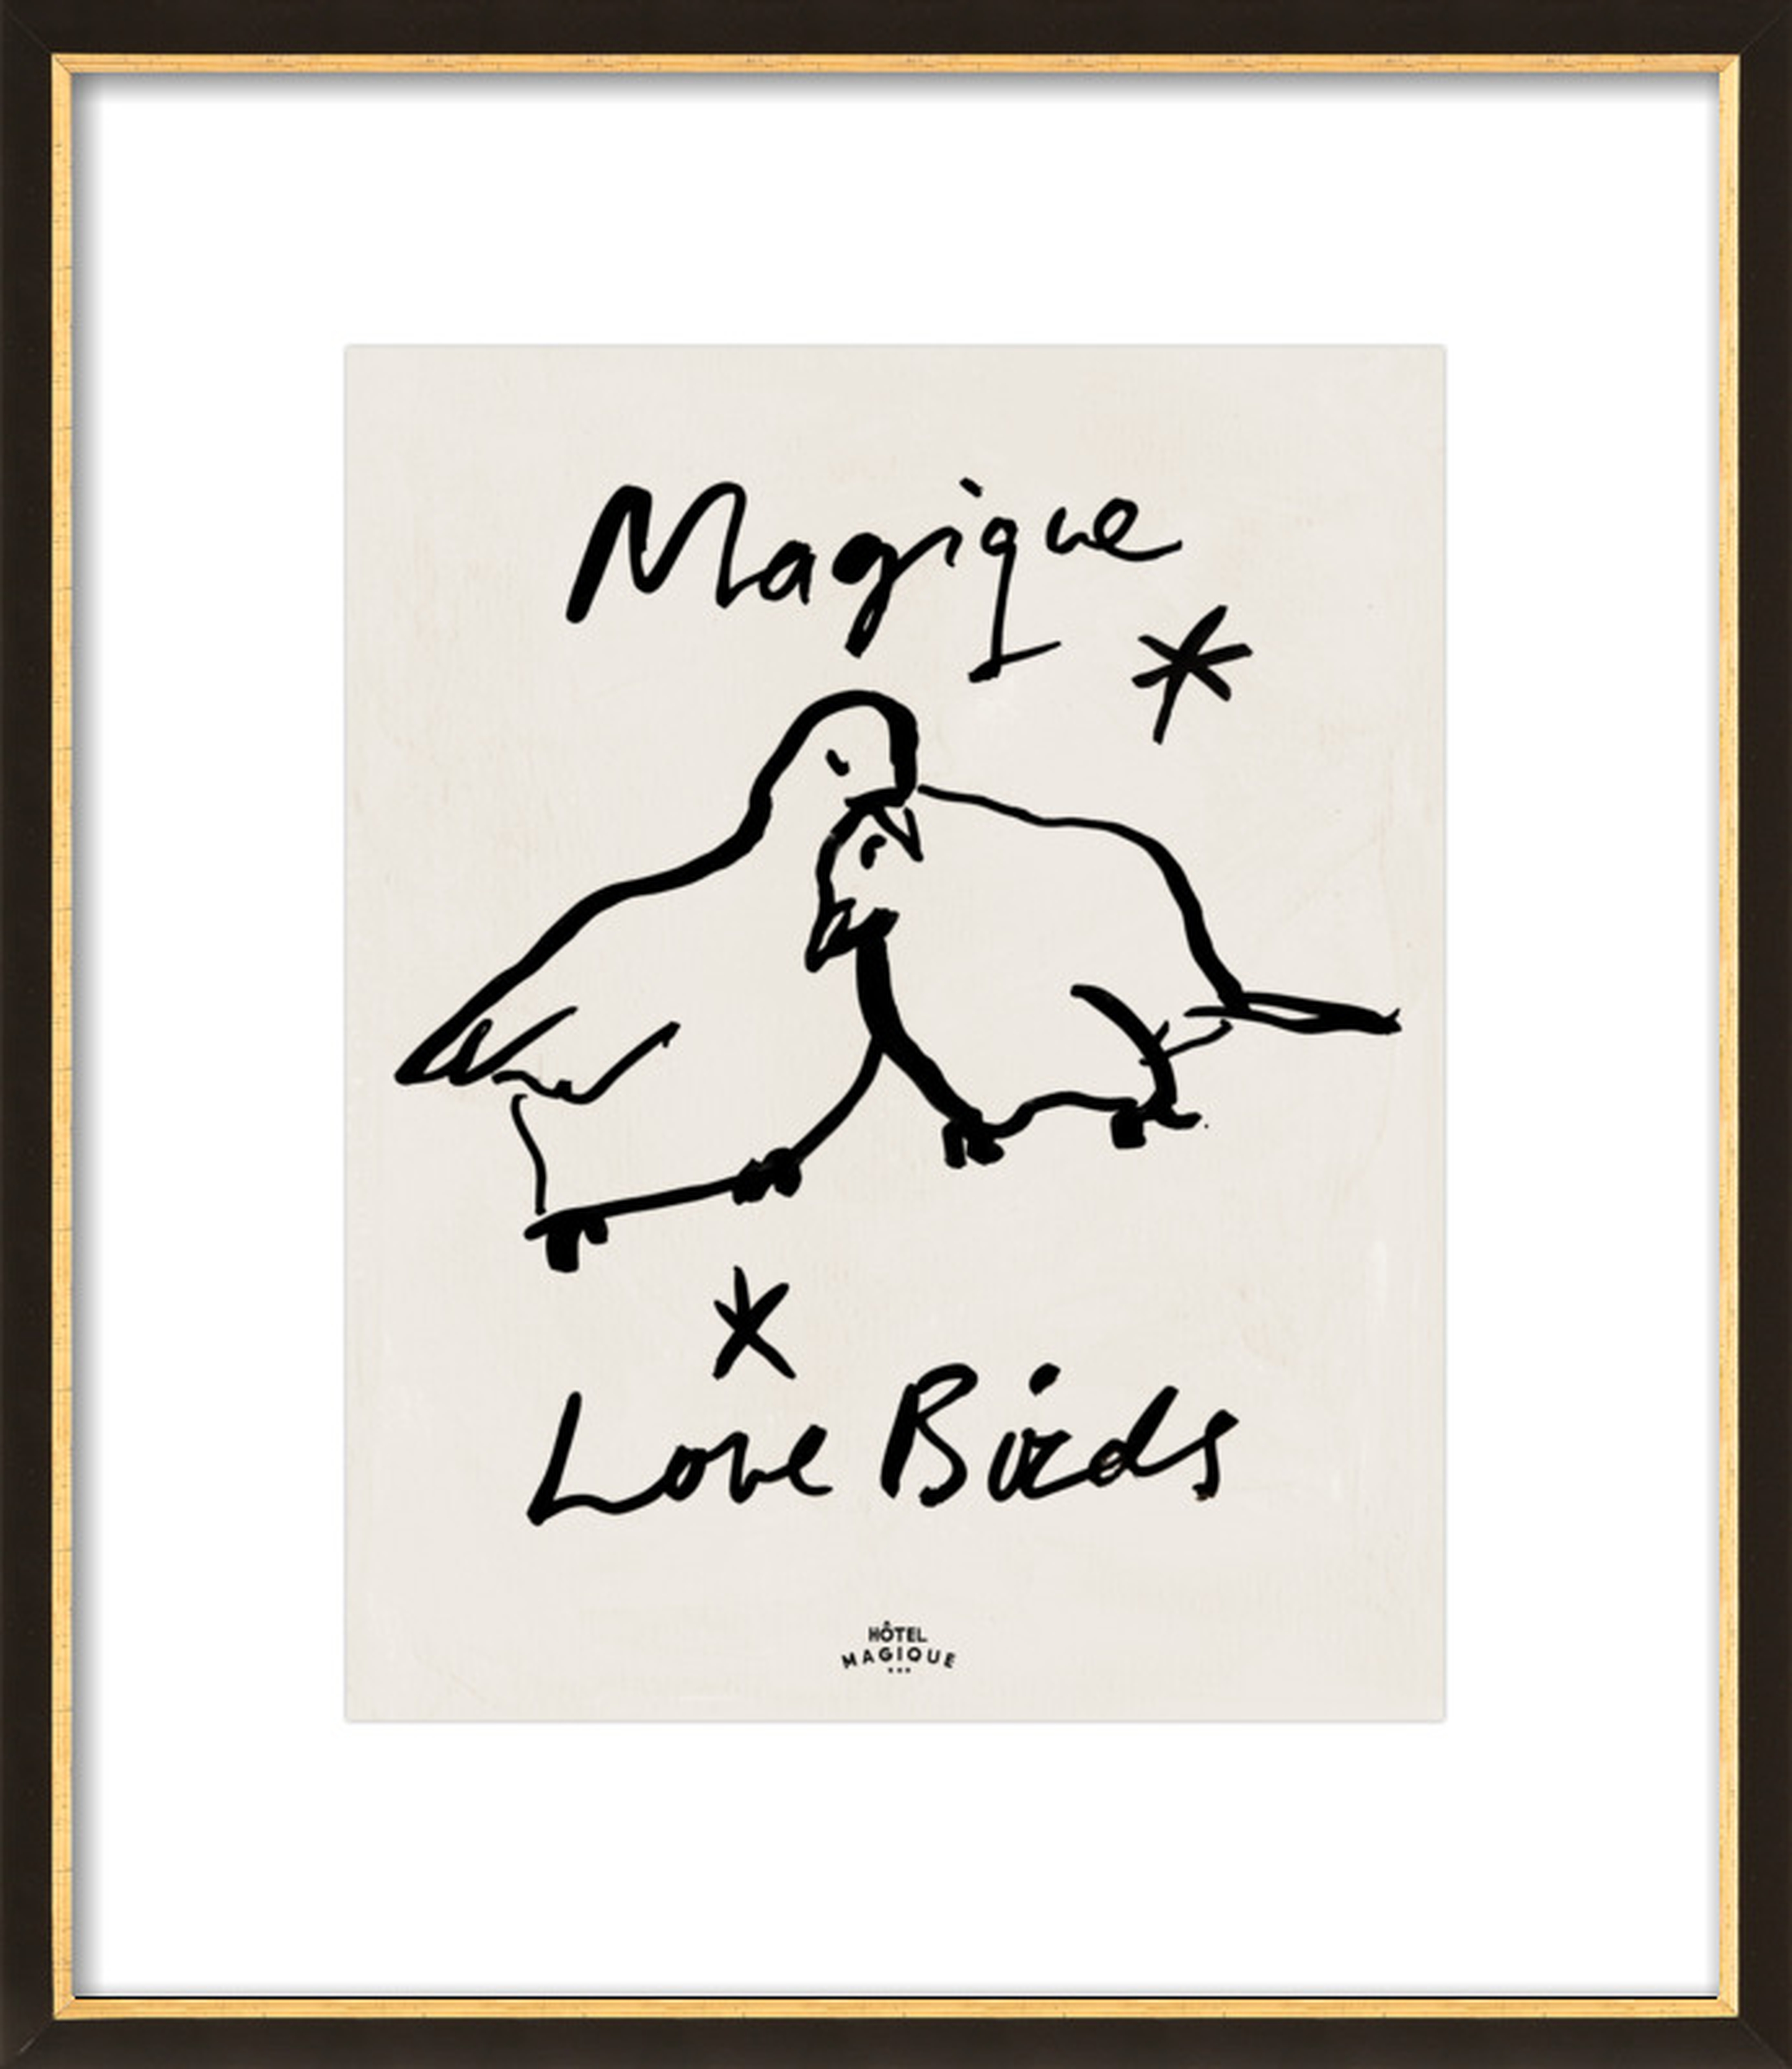 MAGIQUE LOVE BIRDS by Milou Neelen for Artfully Walls - Artfully Walls